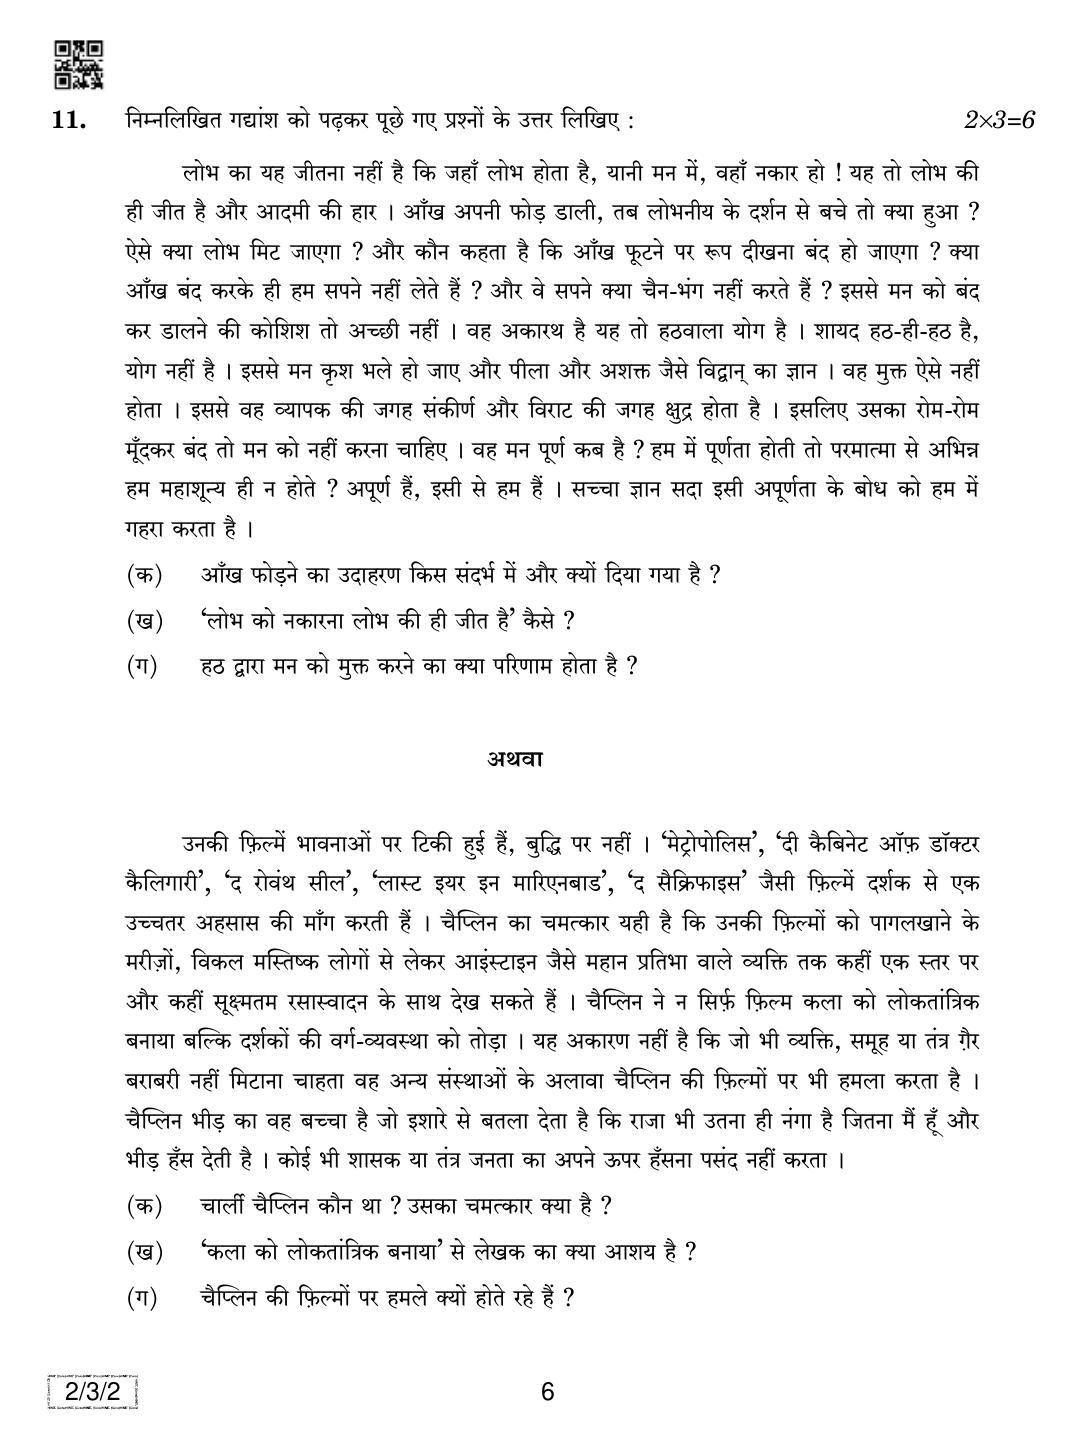 CBSE Class 12 2-3-2 Hindi Core 2019 Question Paper - Page 6